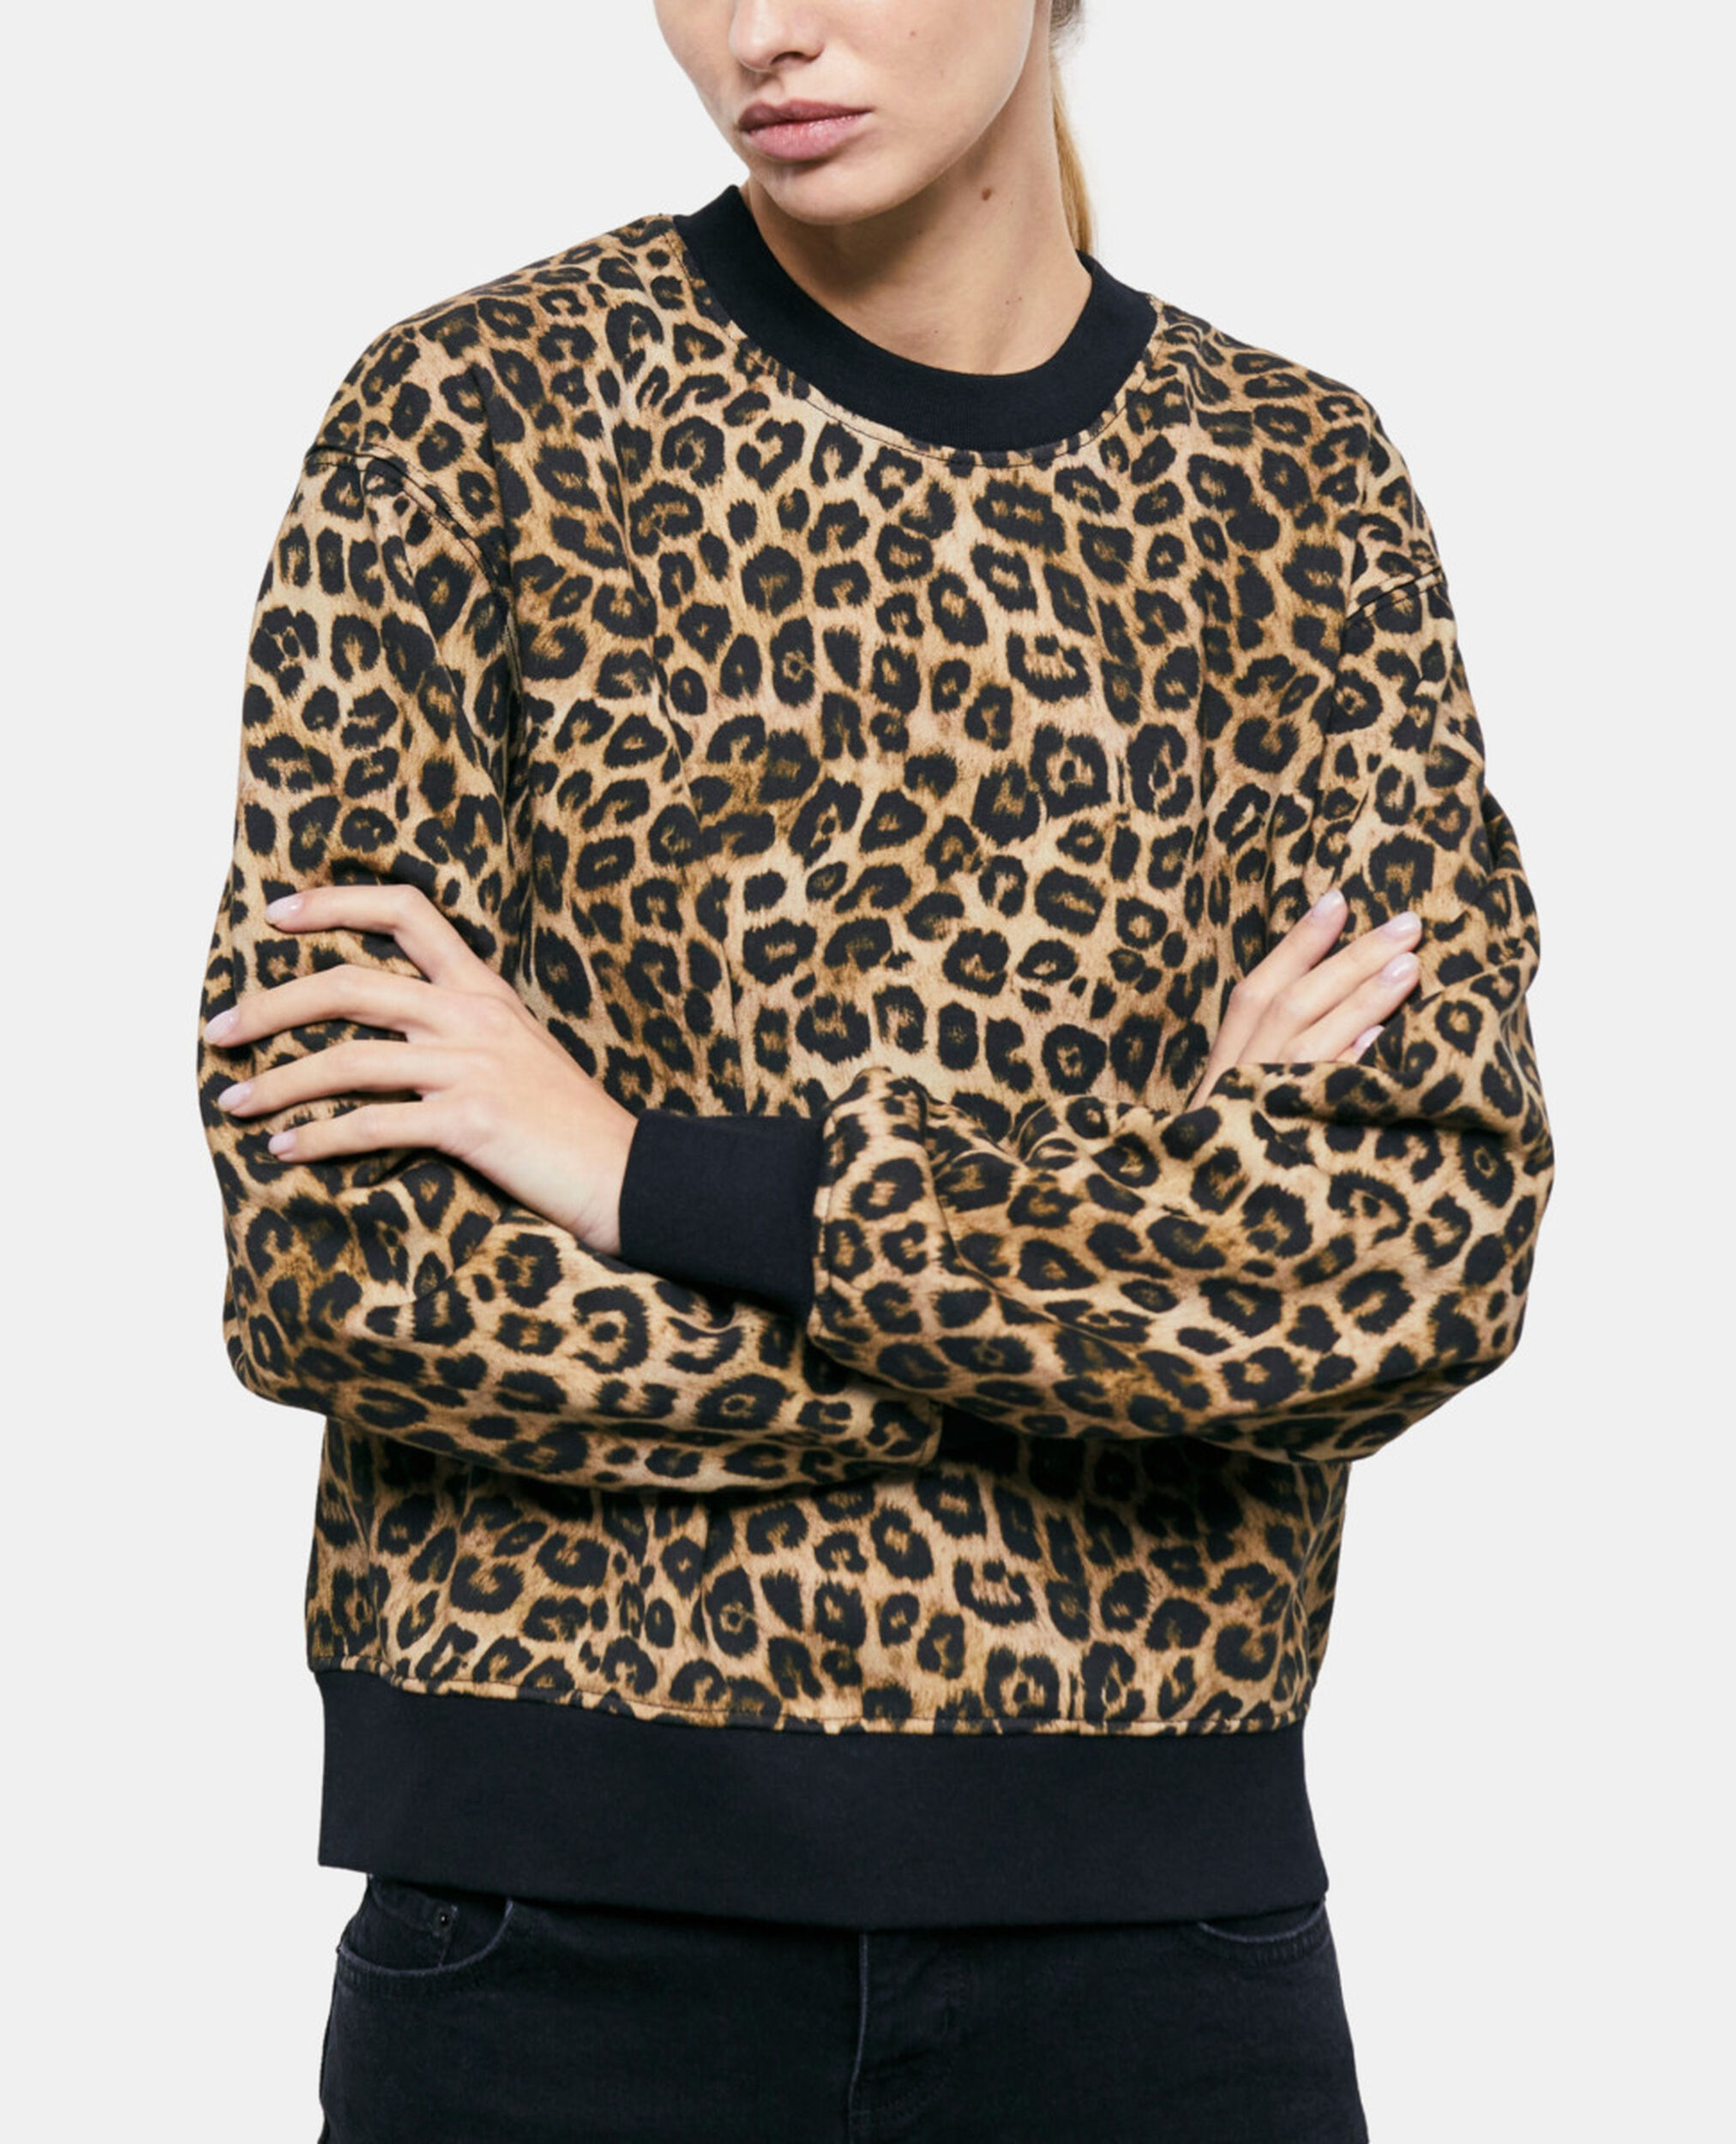 Sweatshirt léopard, LEOPARD, hi-res image number null